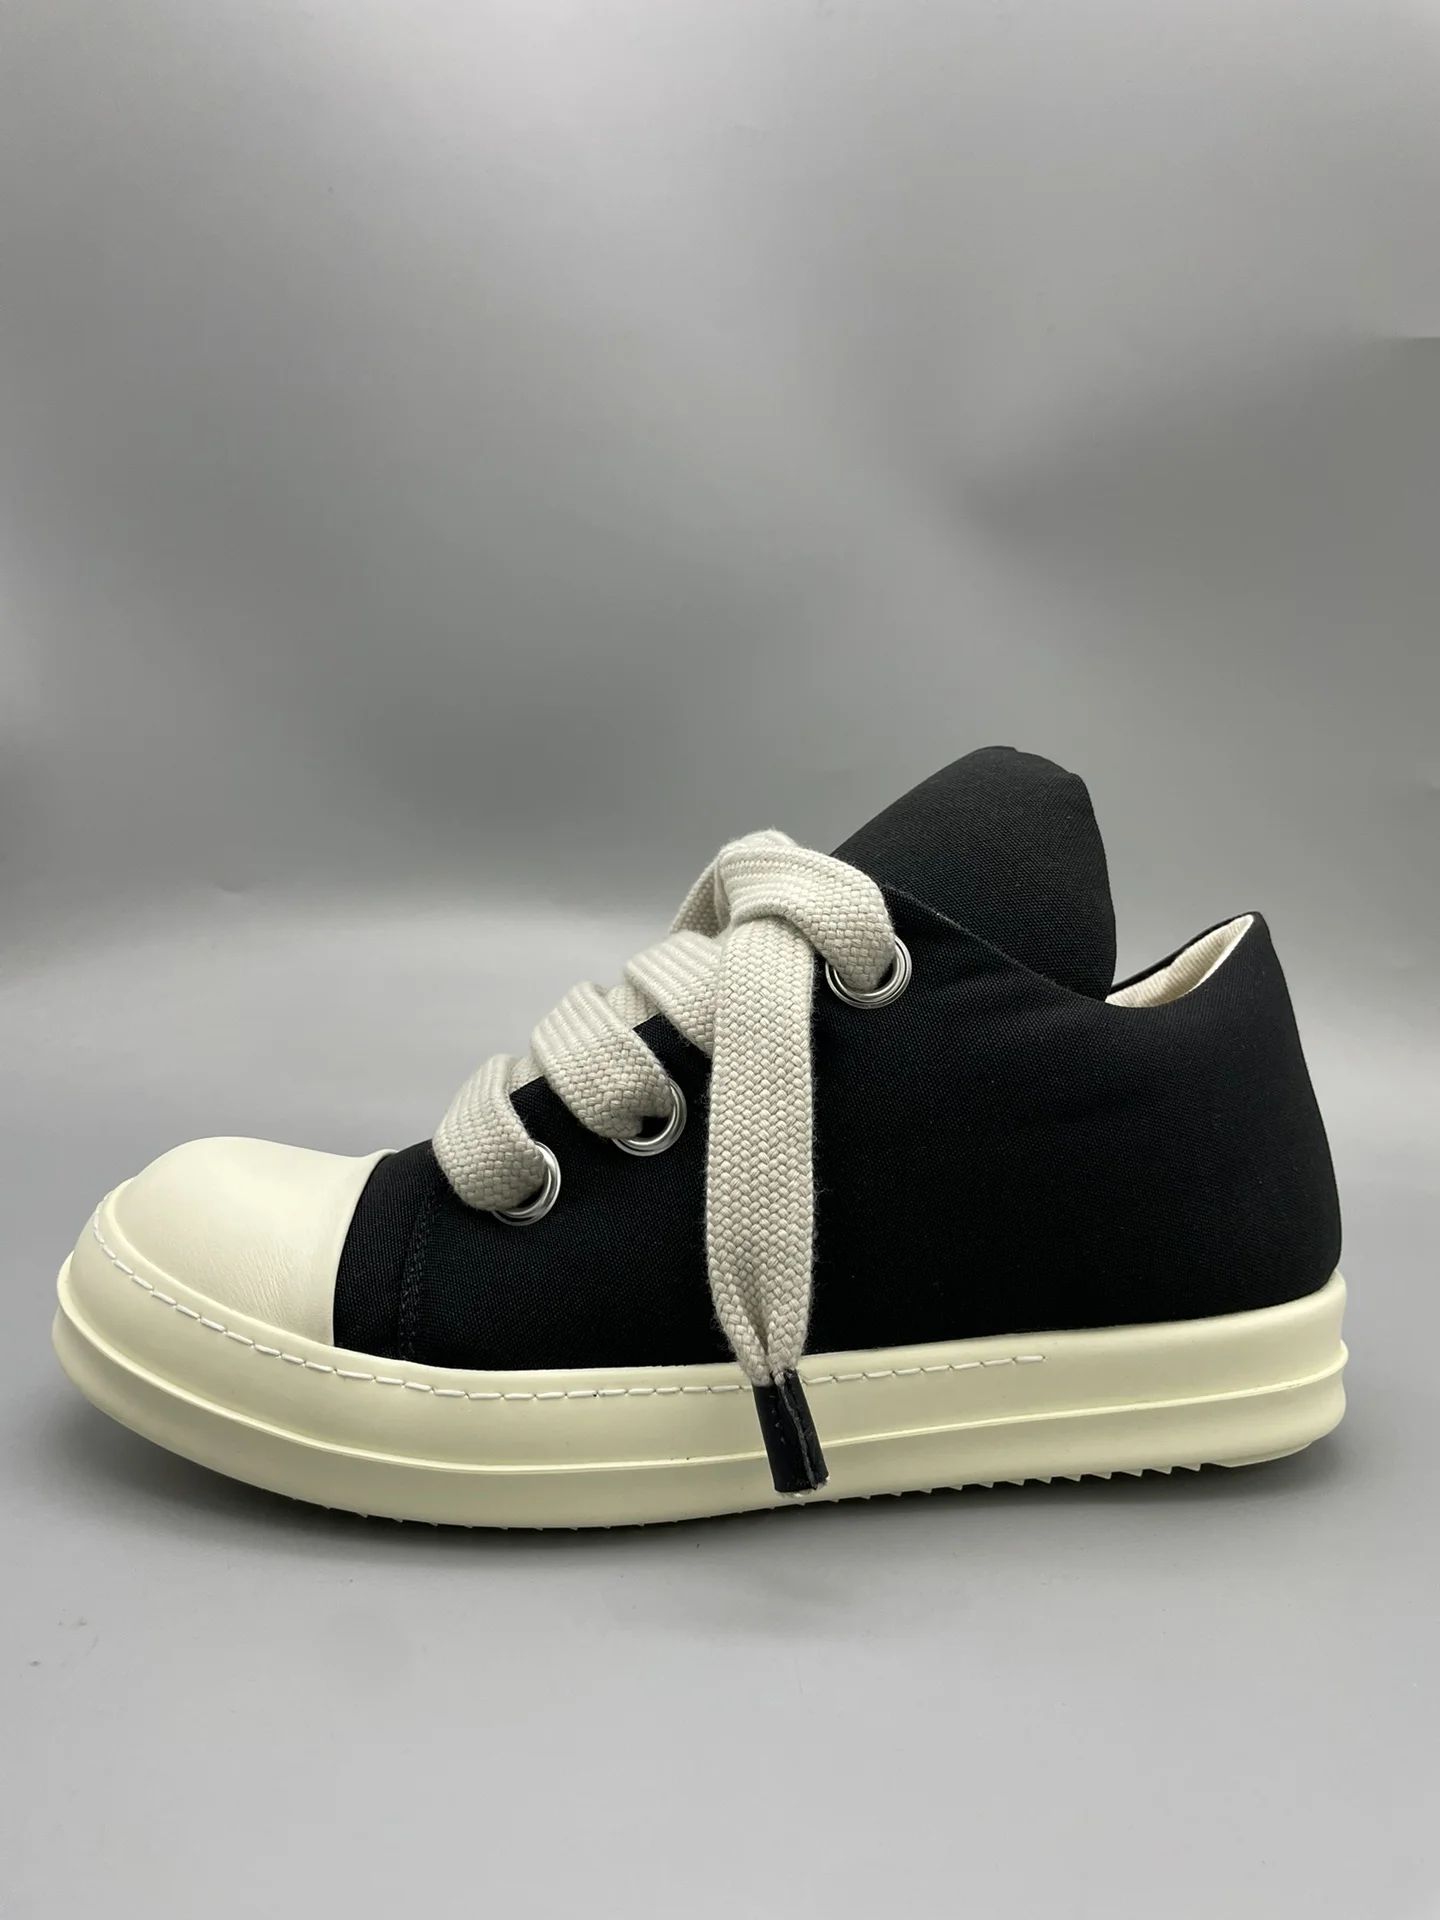 

Owen Seak Men Women Platform Shoes Canvas Lace Up Zipper Casual Bread Boots Flats Black Heel 7CM Designer Low Top Sneakers